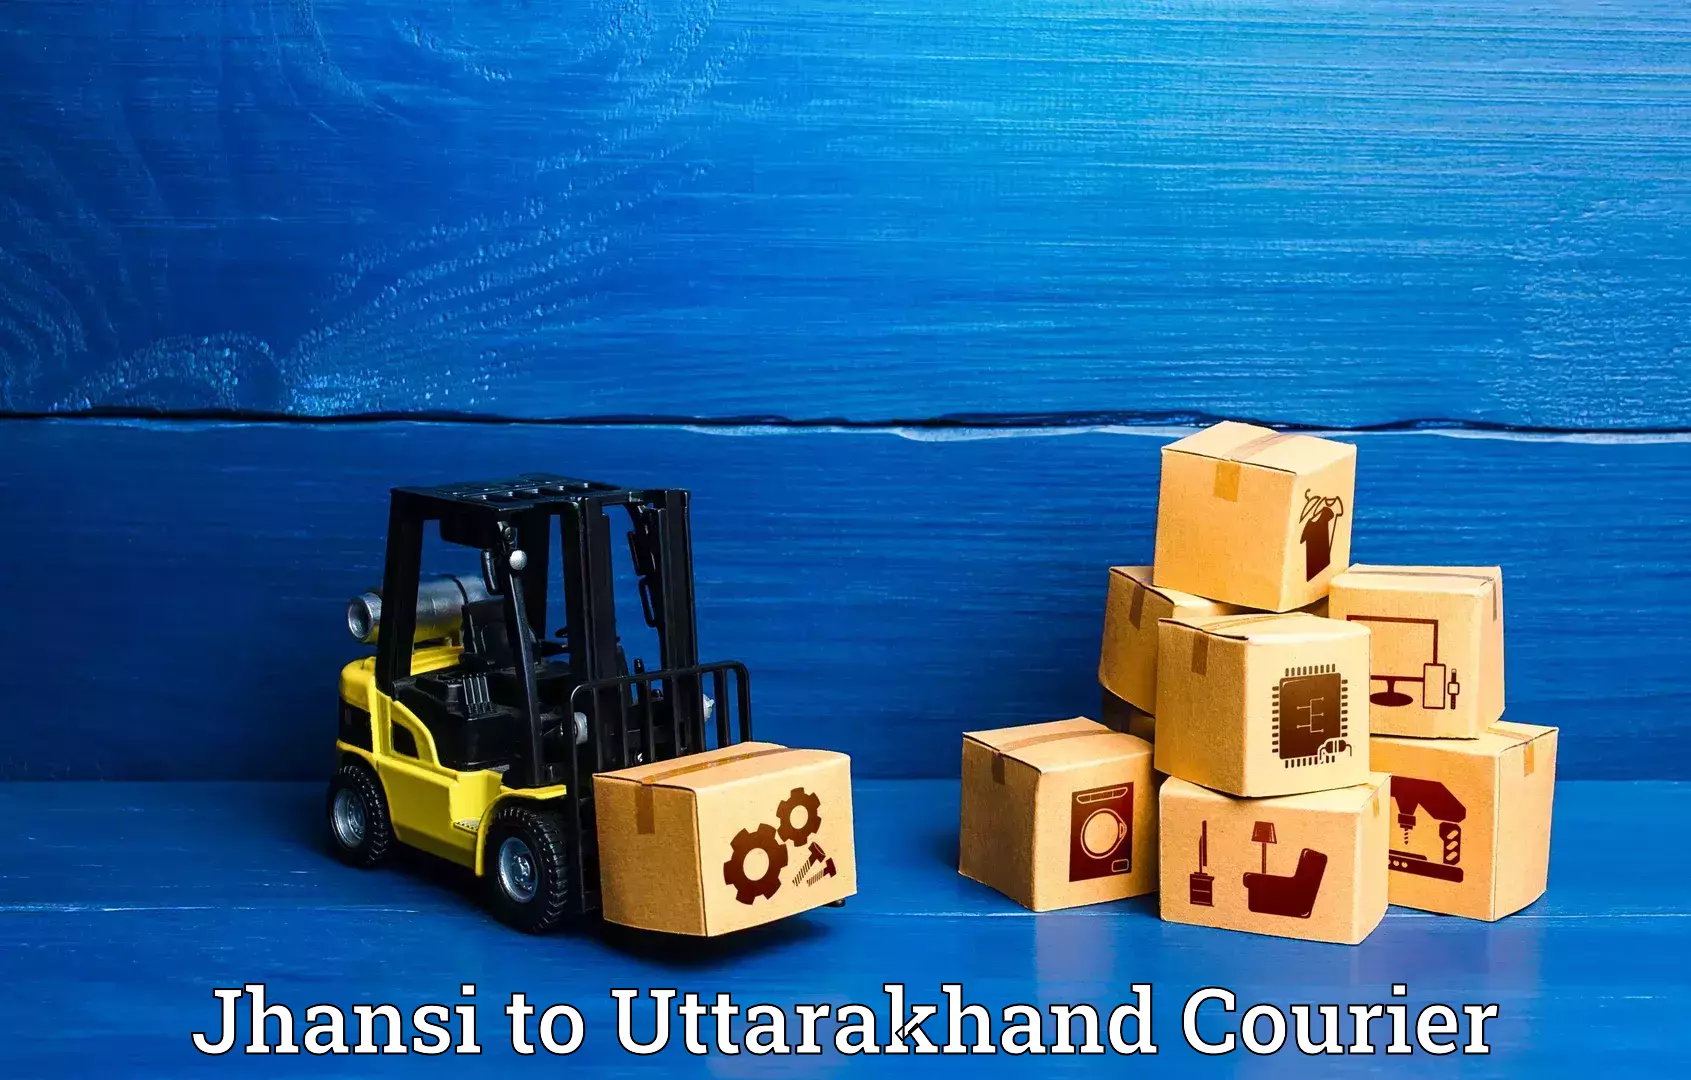 Luggage delivery network Jhansi to Uttarakhand